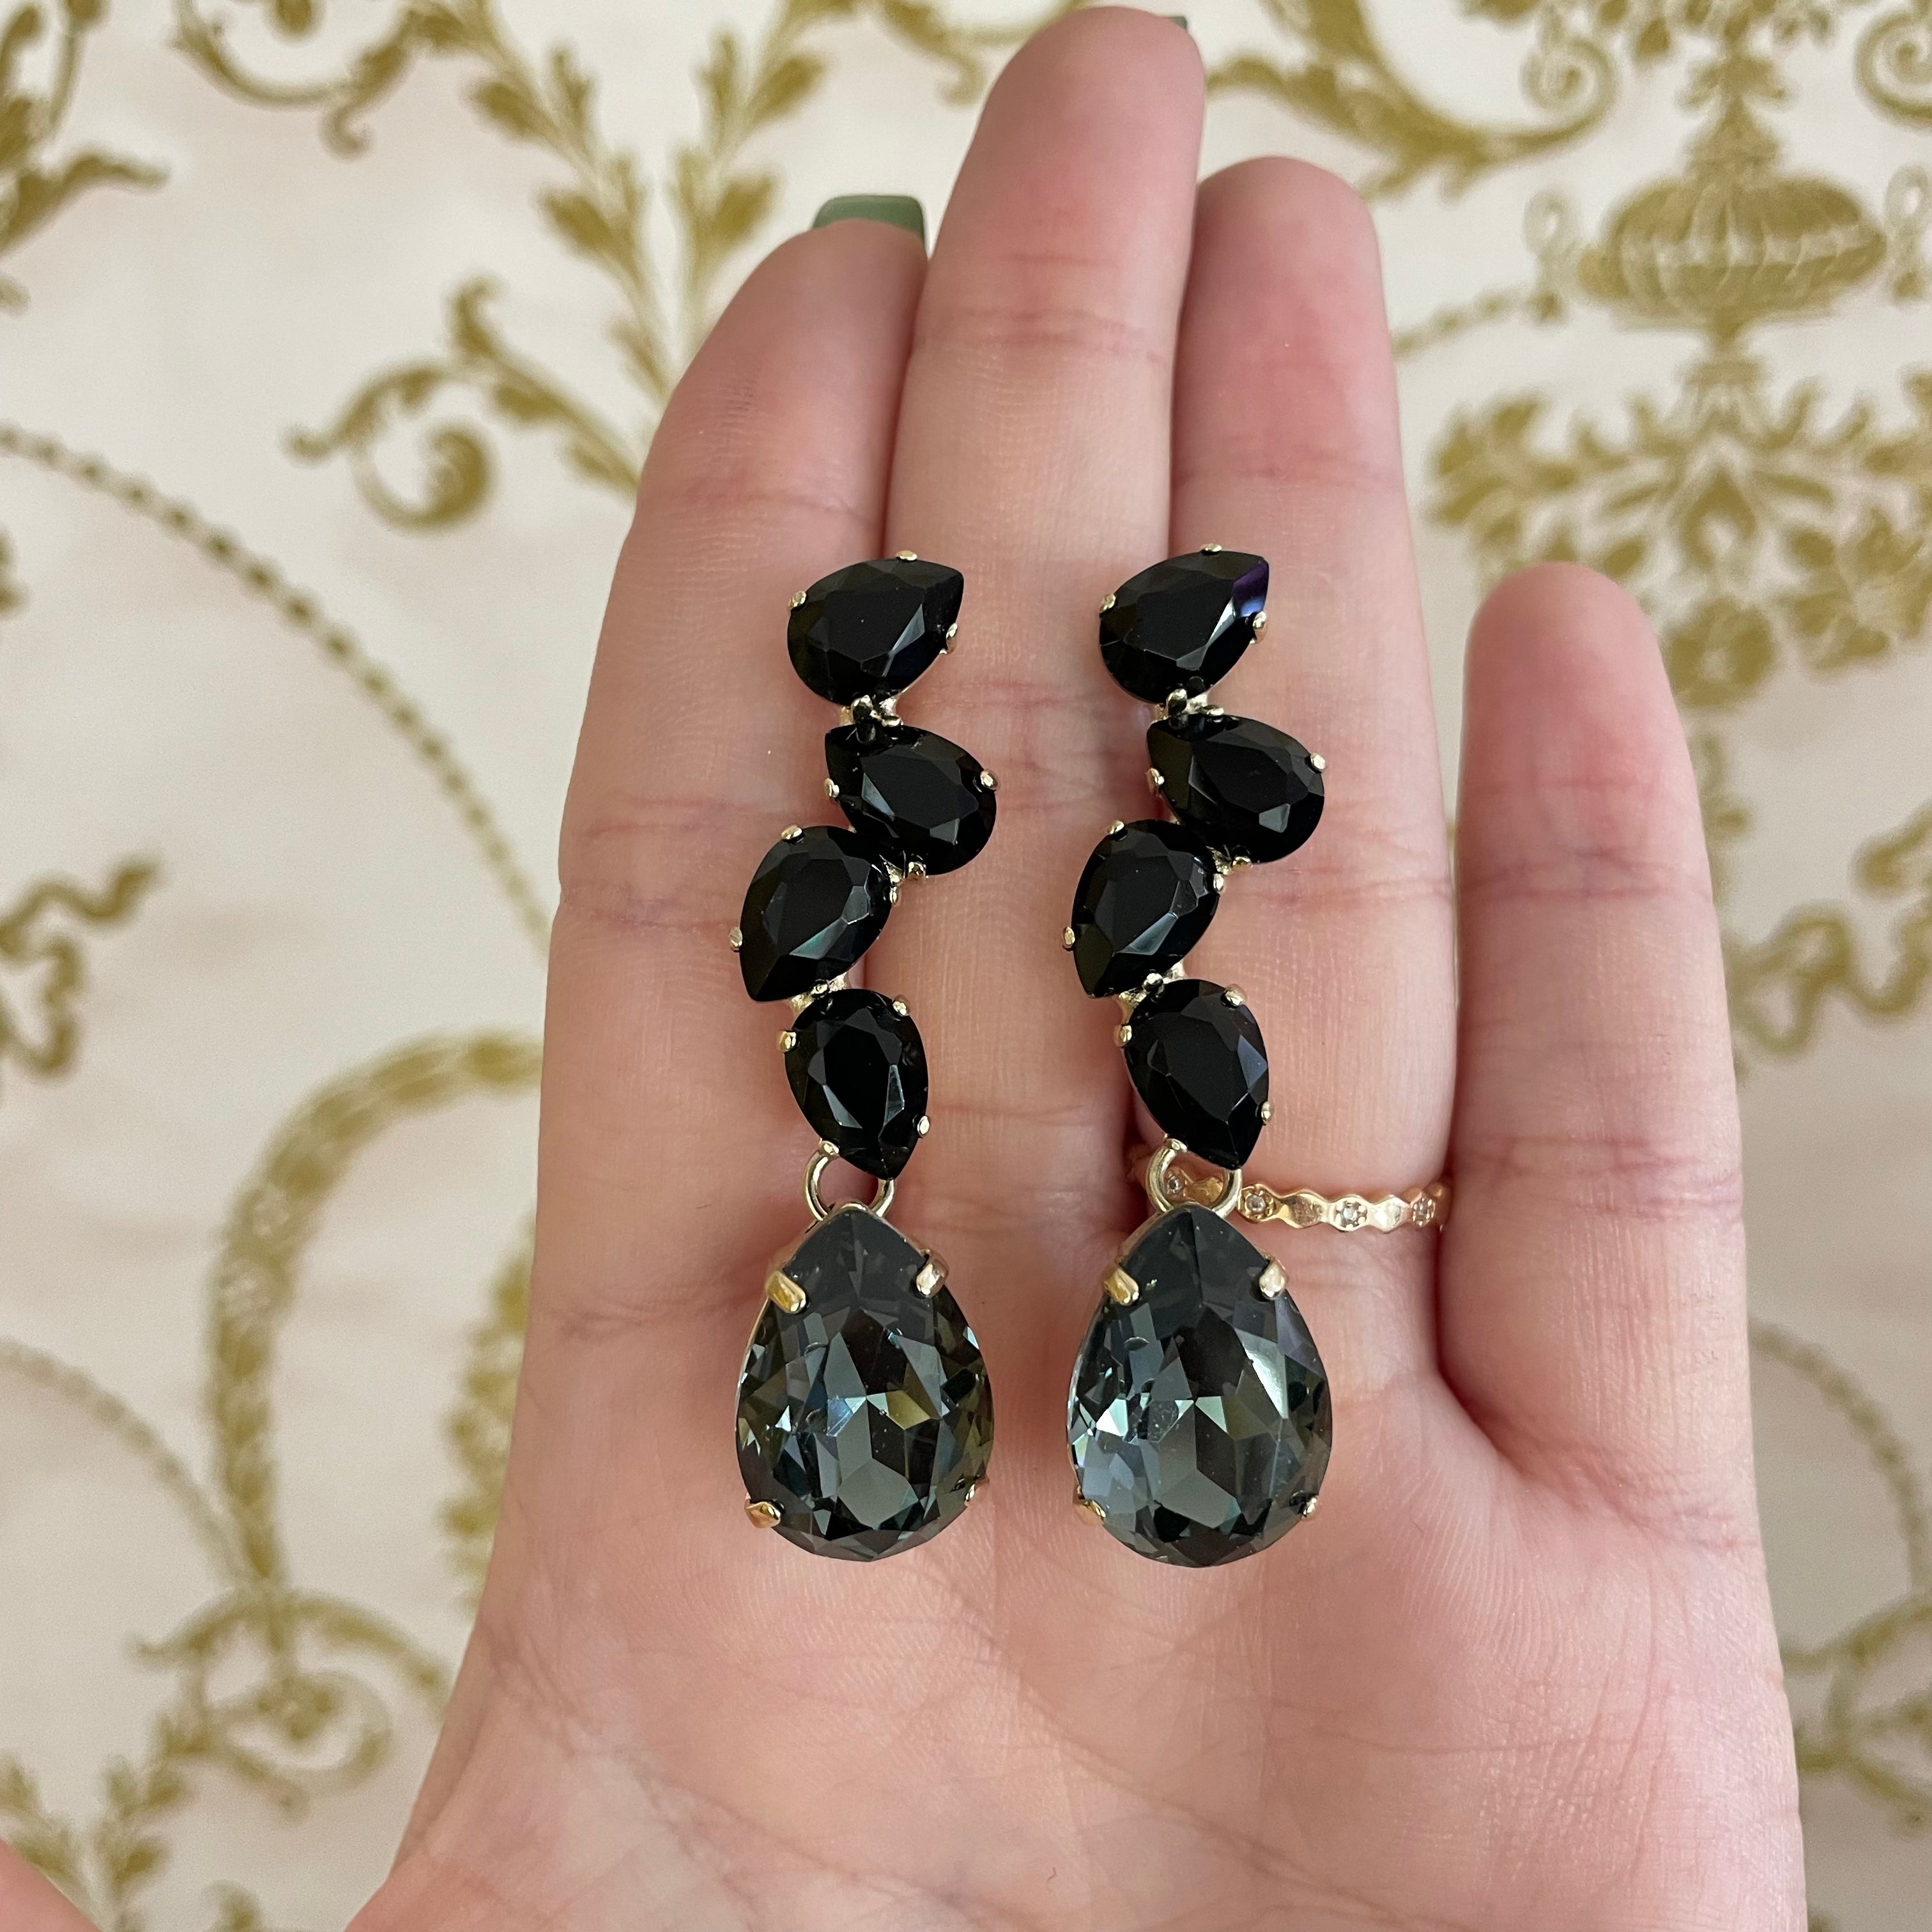 Teardrop elegant earrings